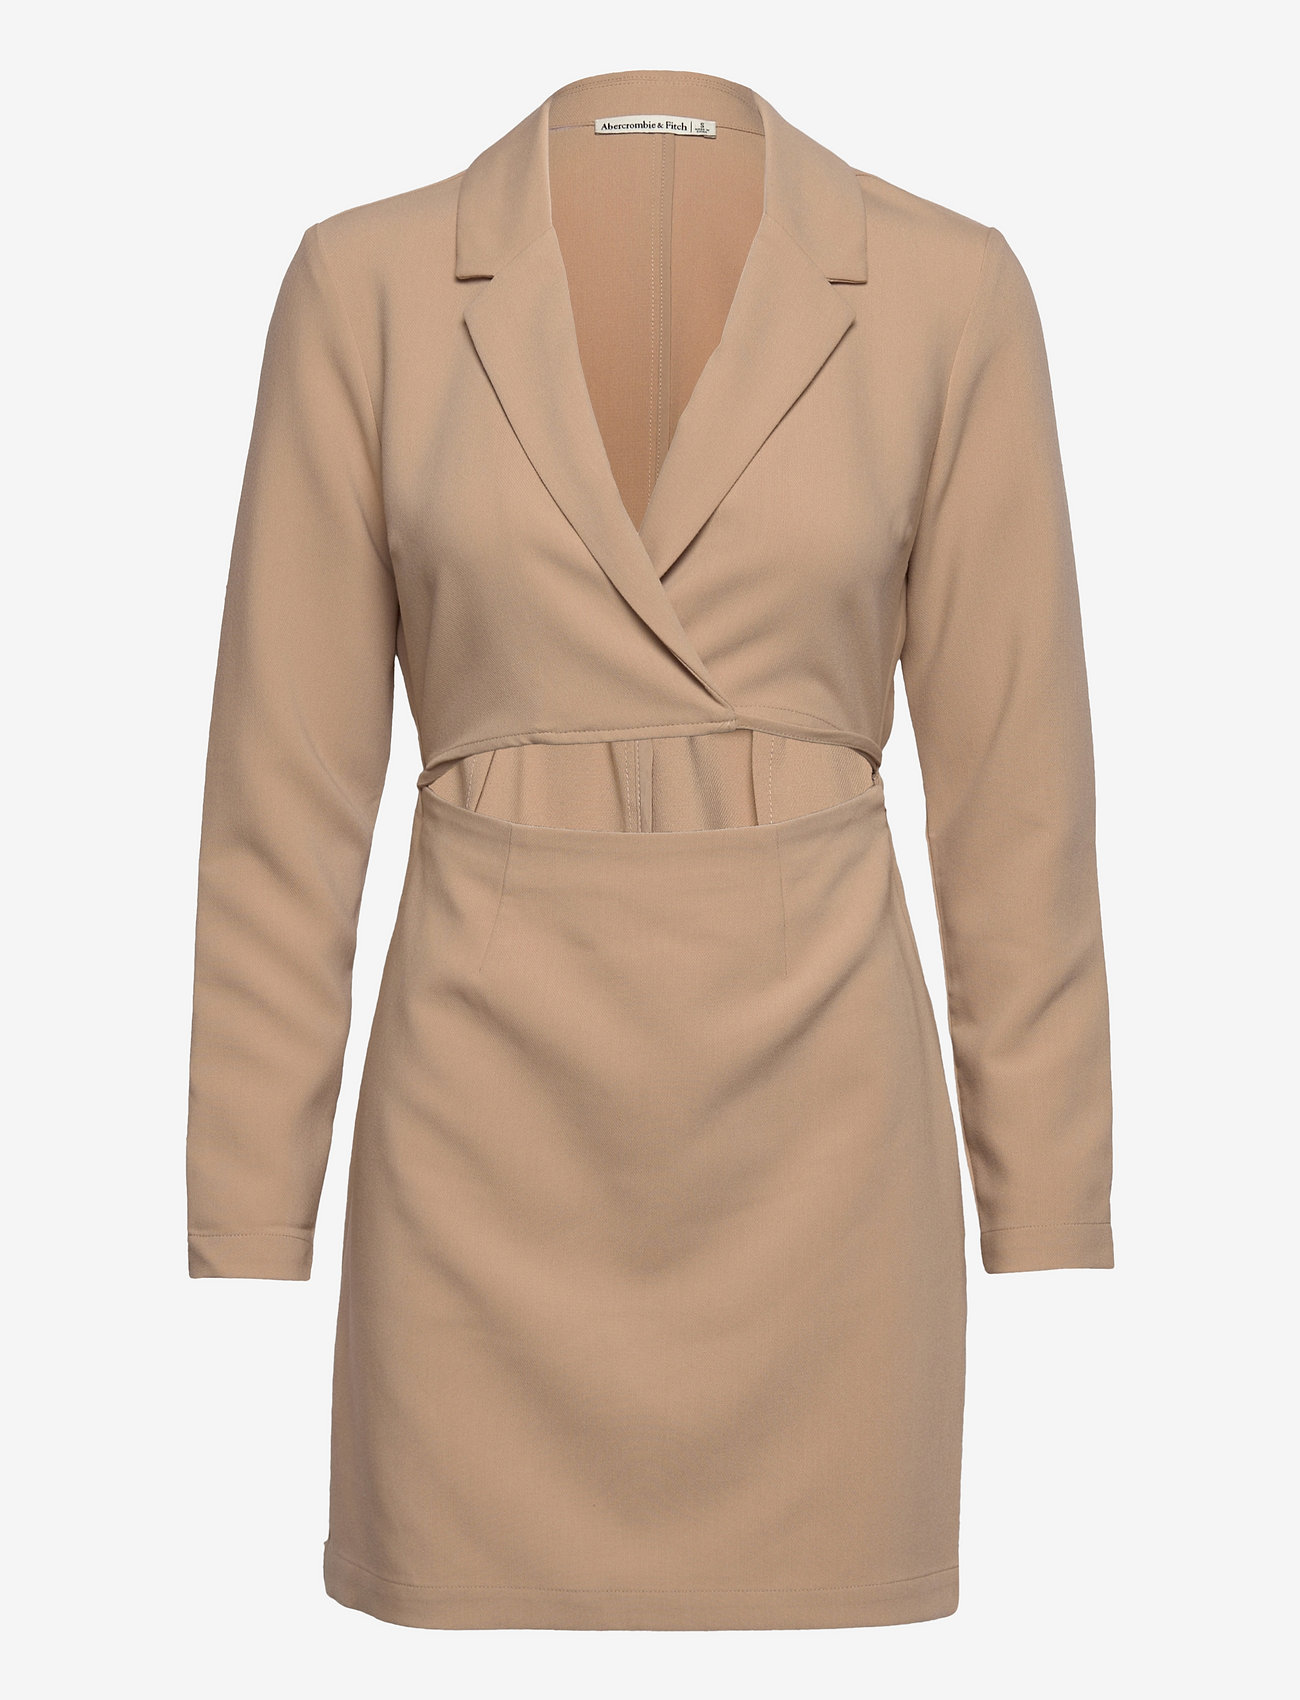 Abercrombie & Fitch - ANF WOMENS DRESSES - Īsas kleitas - brown solid - 0